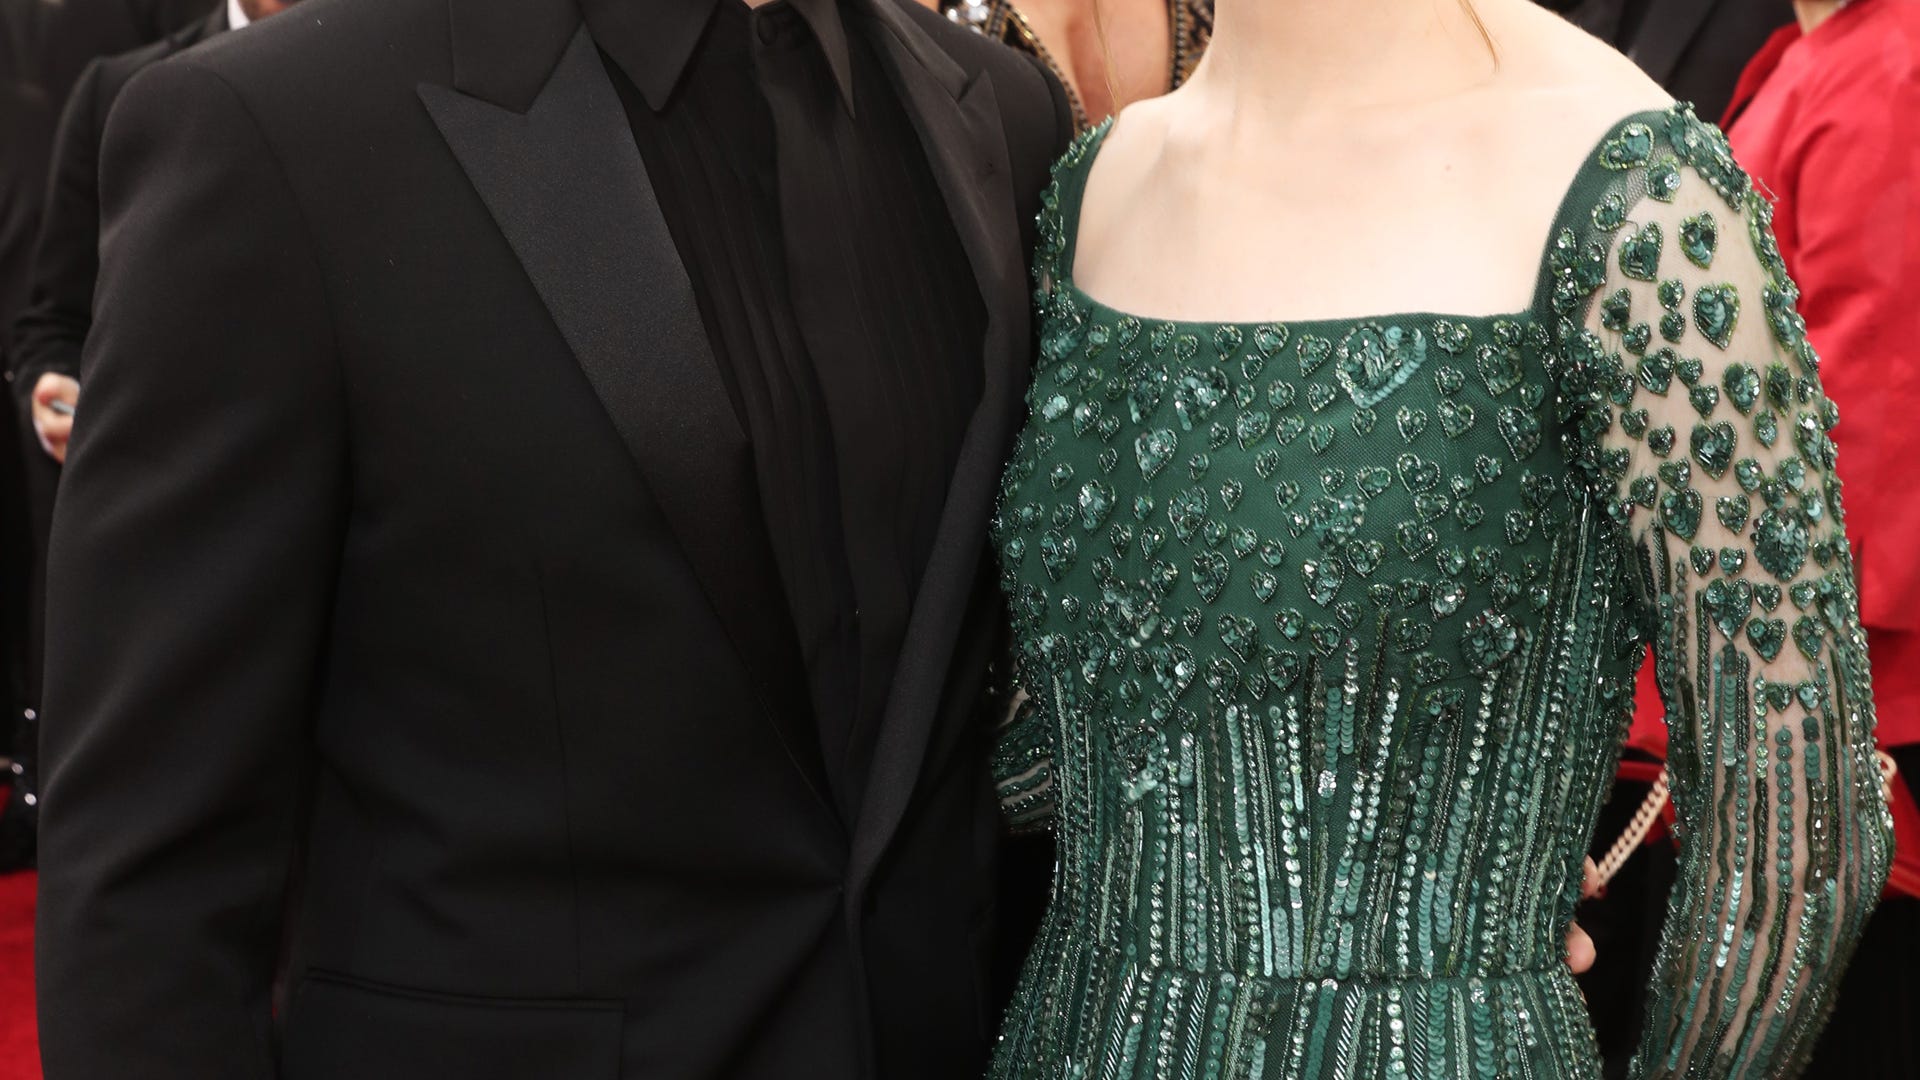 Kit Harington and Rose Leslie, 77th Annual Golden Globes